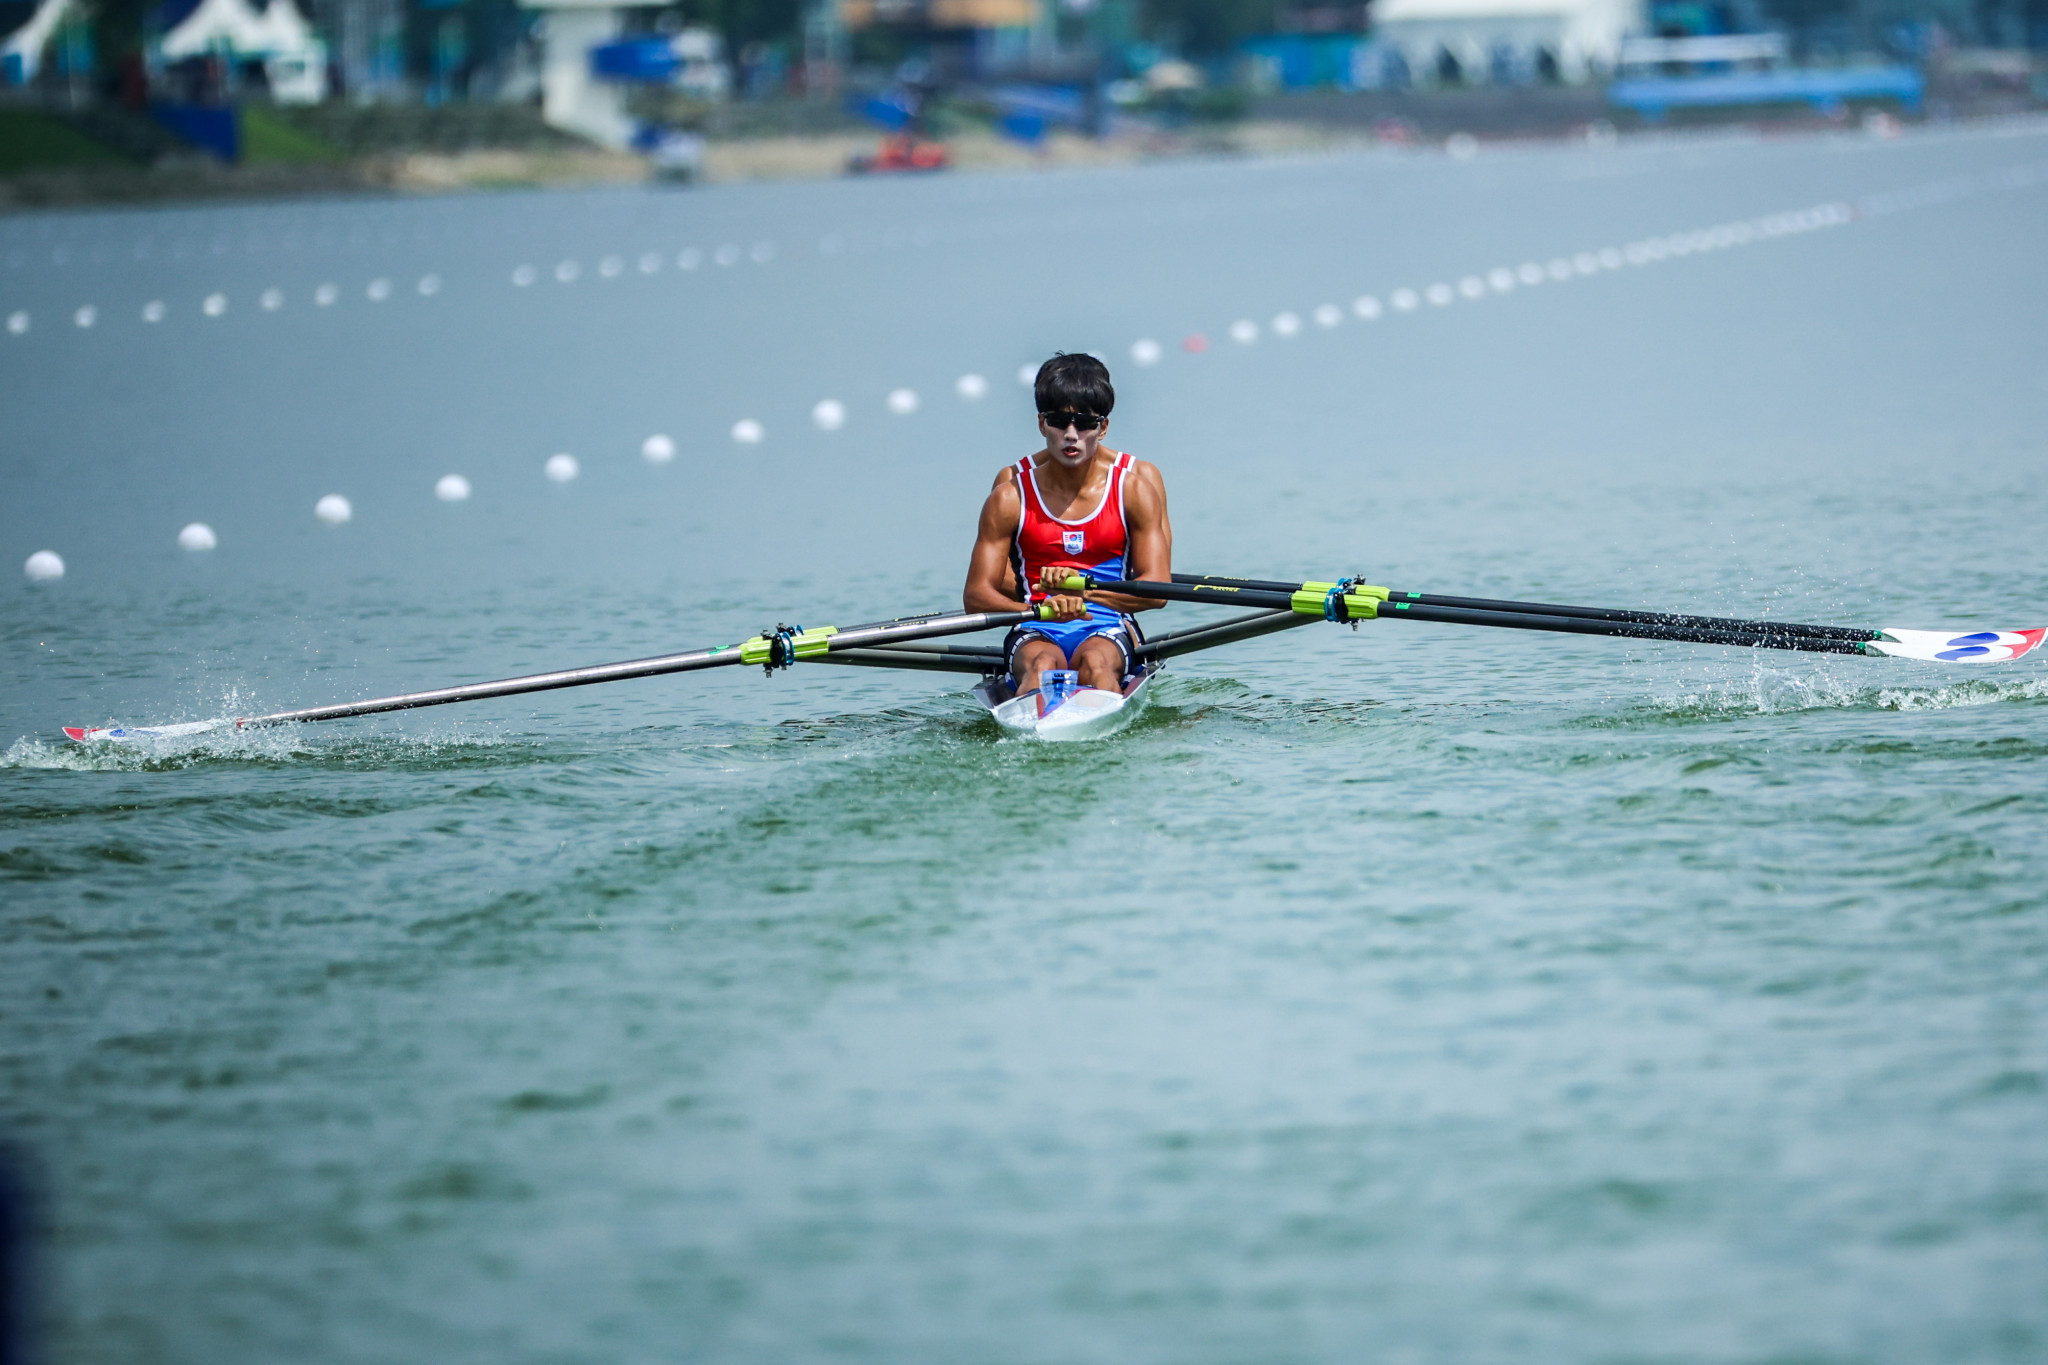 South Korean rowers in action as the heats began today in Chengdu ©Chengdu 2021